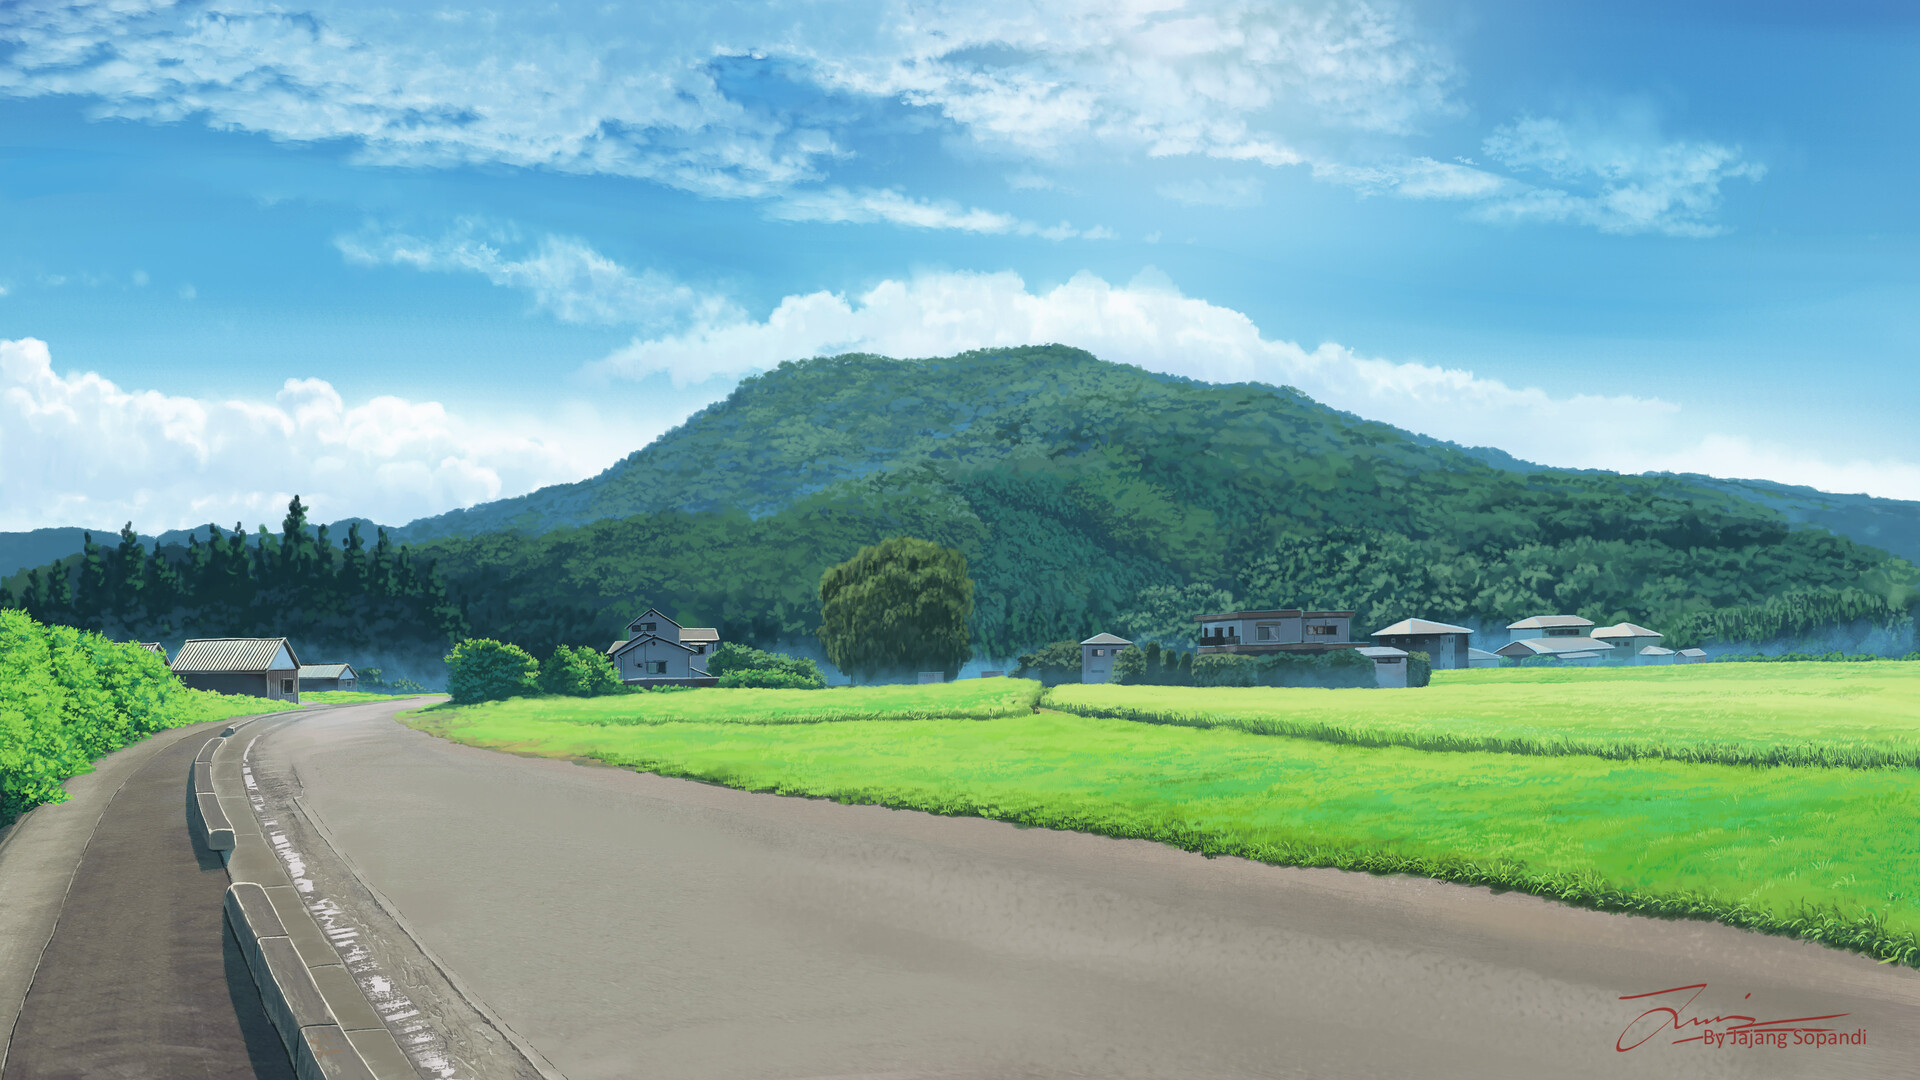 Jajang Sopandi Landscape Digital Art Clear Sky Clouds Anime Outdoors Road Watermarked ArtStation 1920x1080